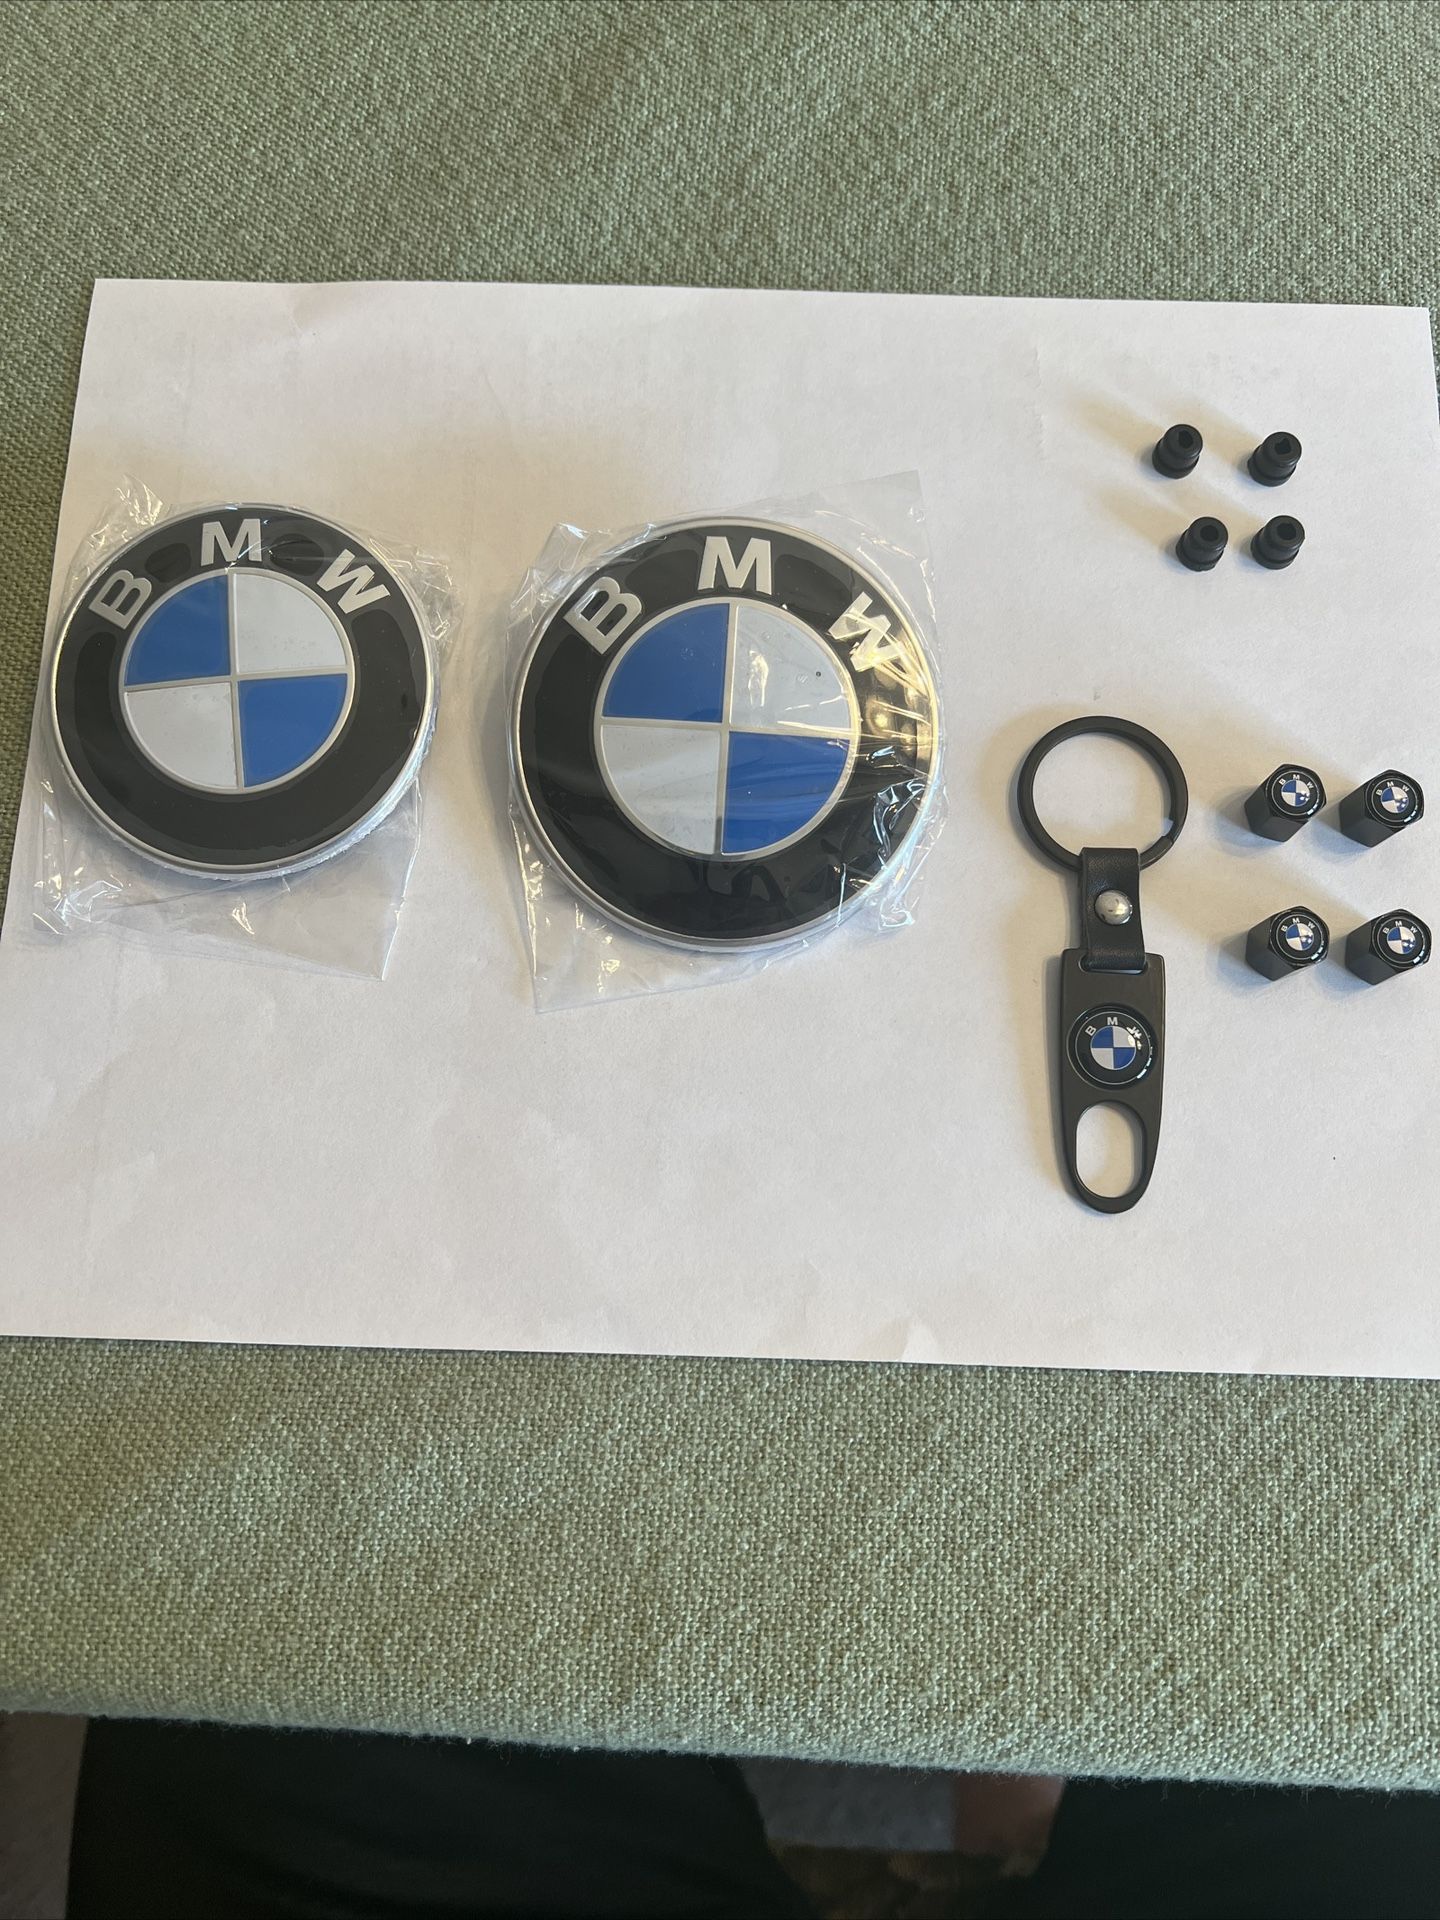 BMW-Emblem Kit-Keychain and Tire Valve Caps-not OEM